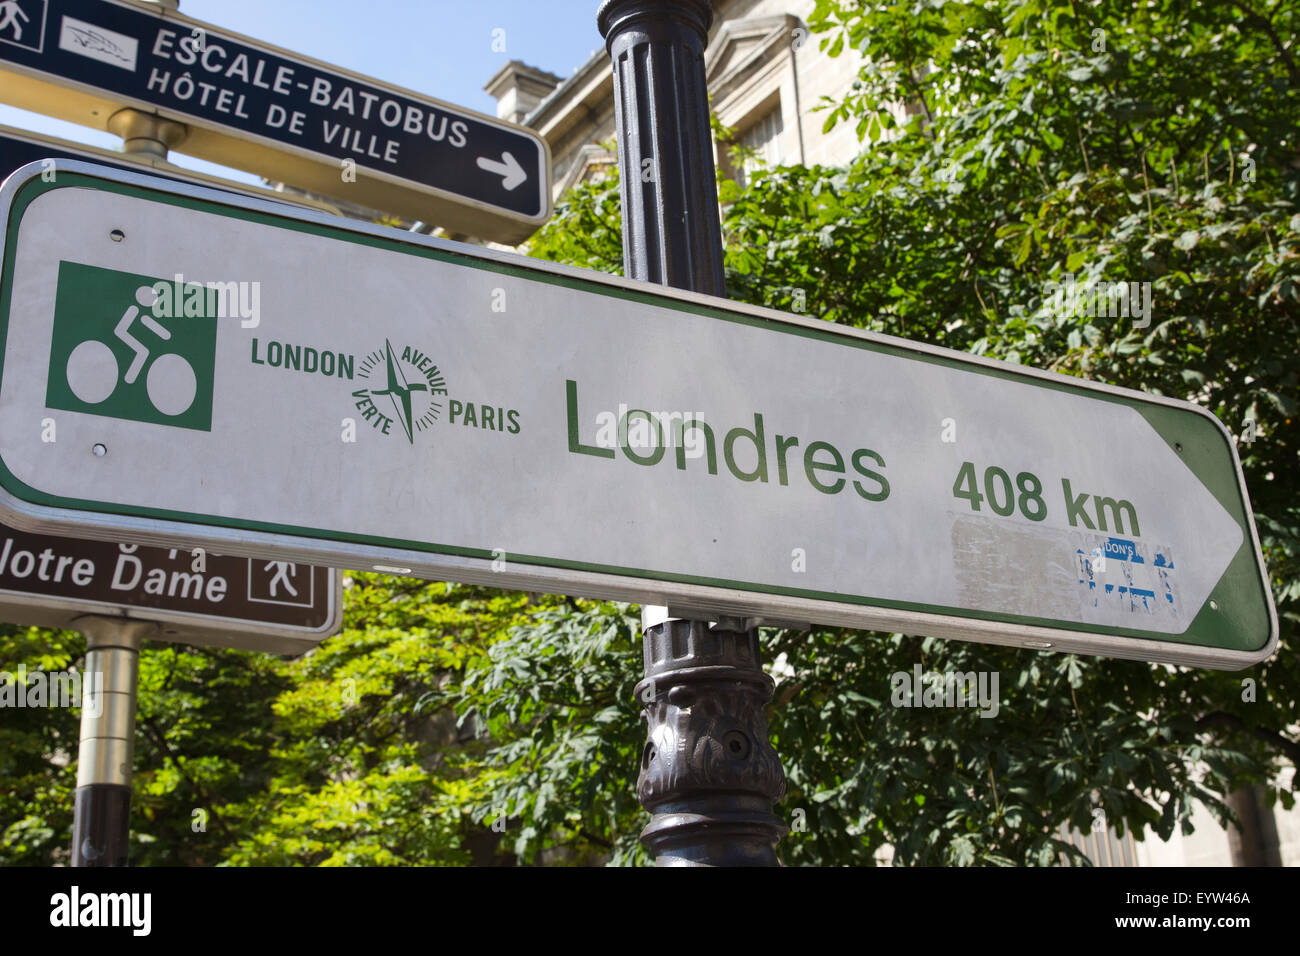 Avenue Verte London - Paris-Zyklus Weg Straßenschild für Londres (London). Stockfoto